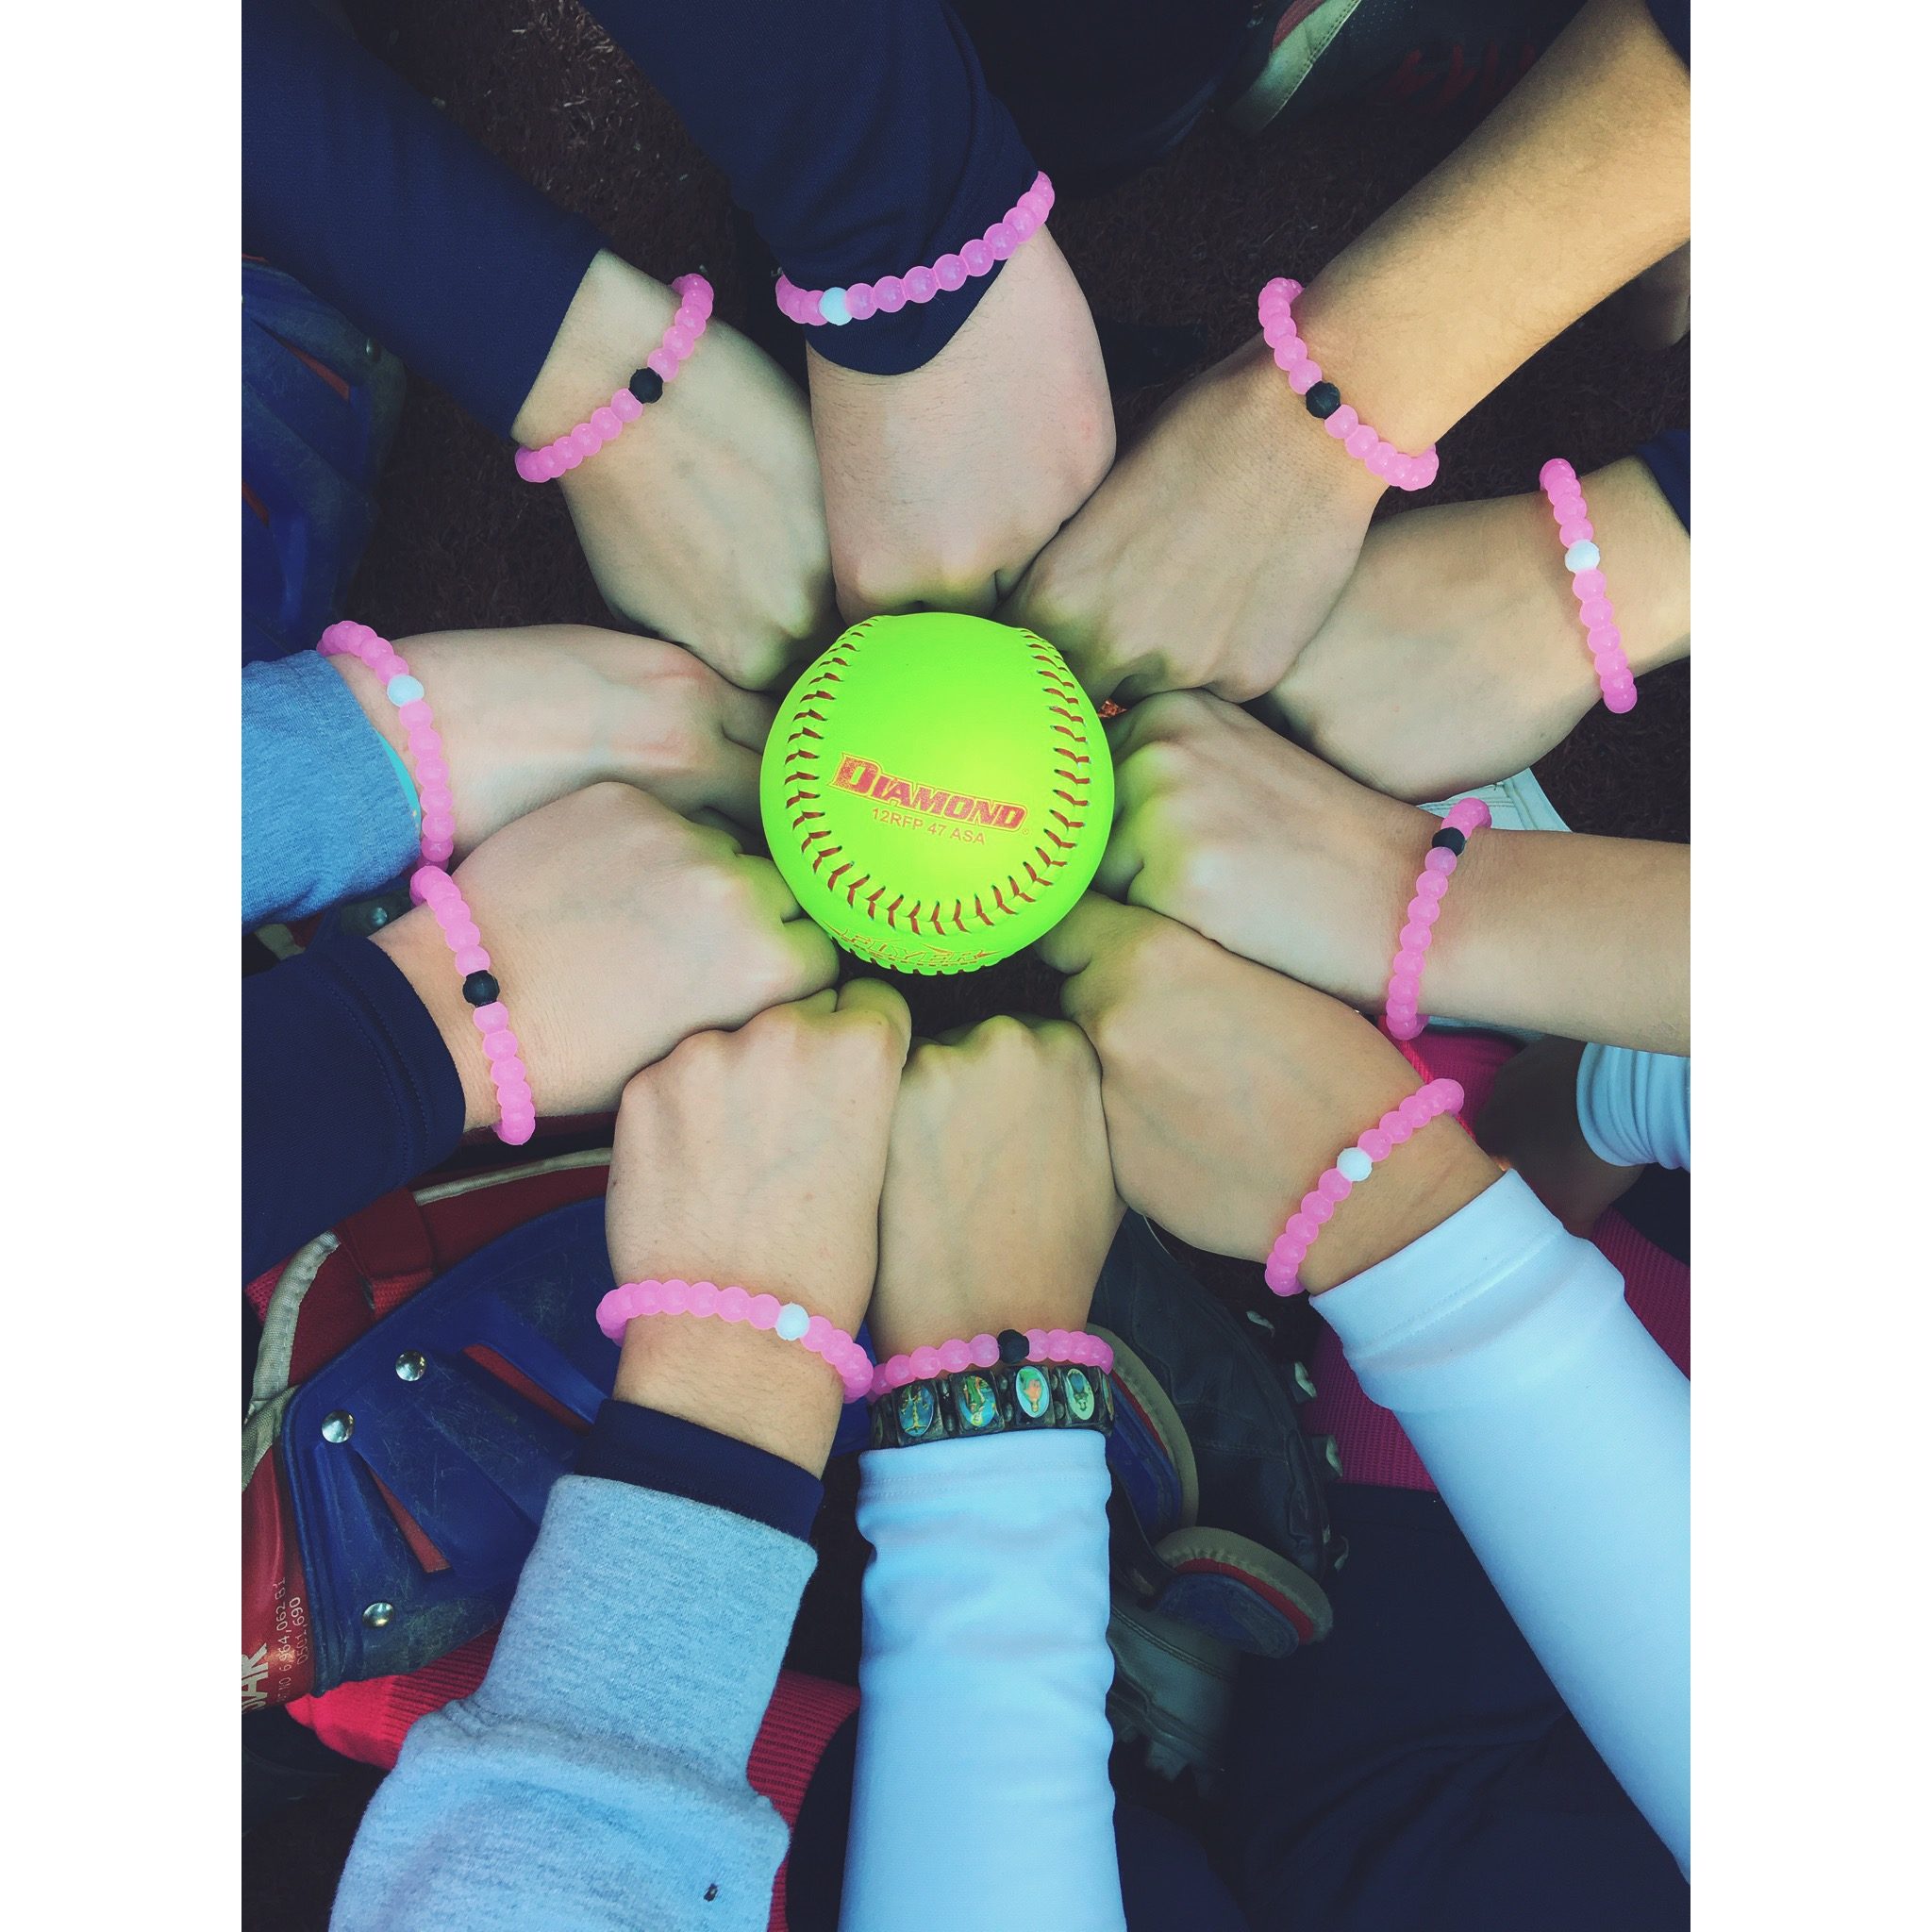 Cancer Awareness through Softball